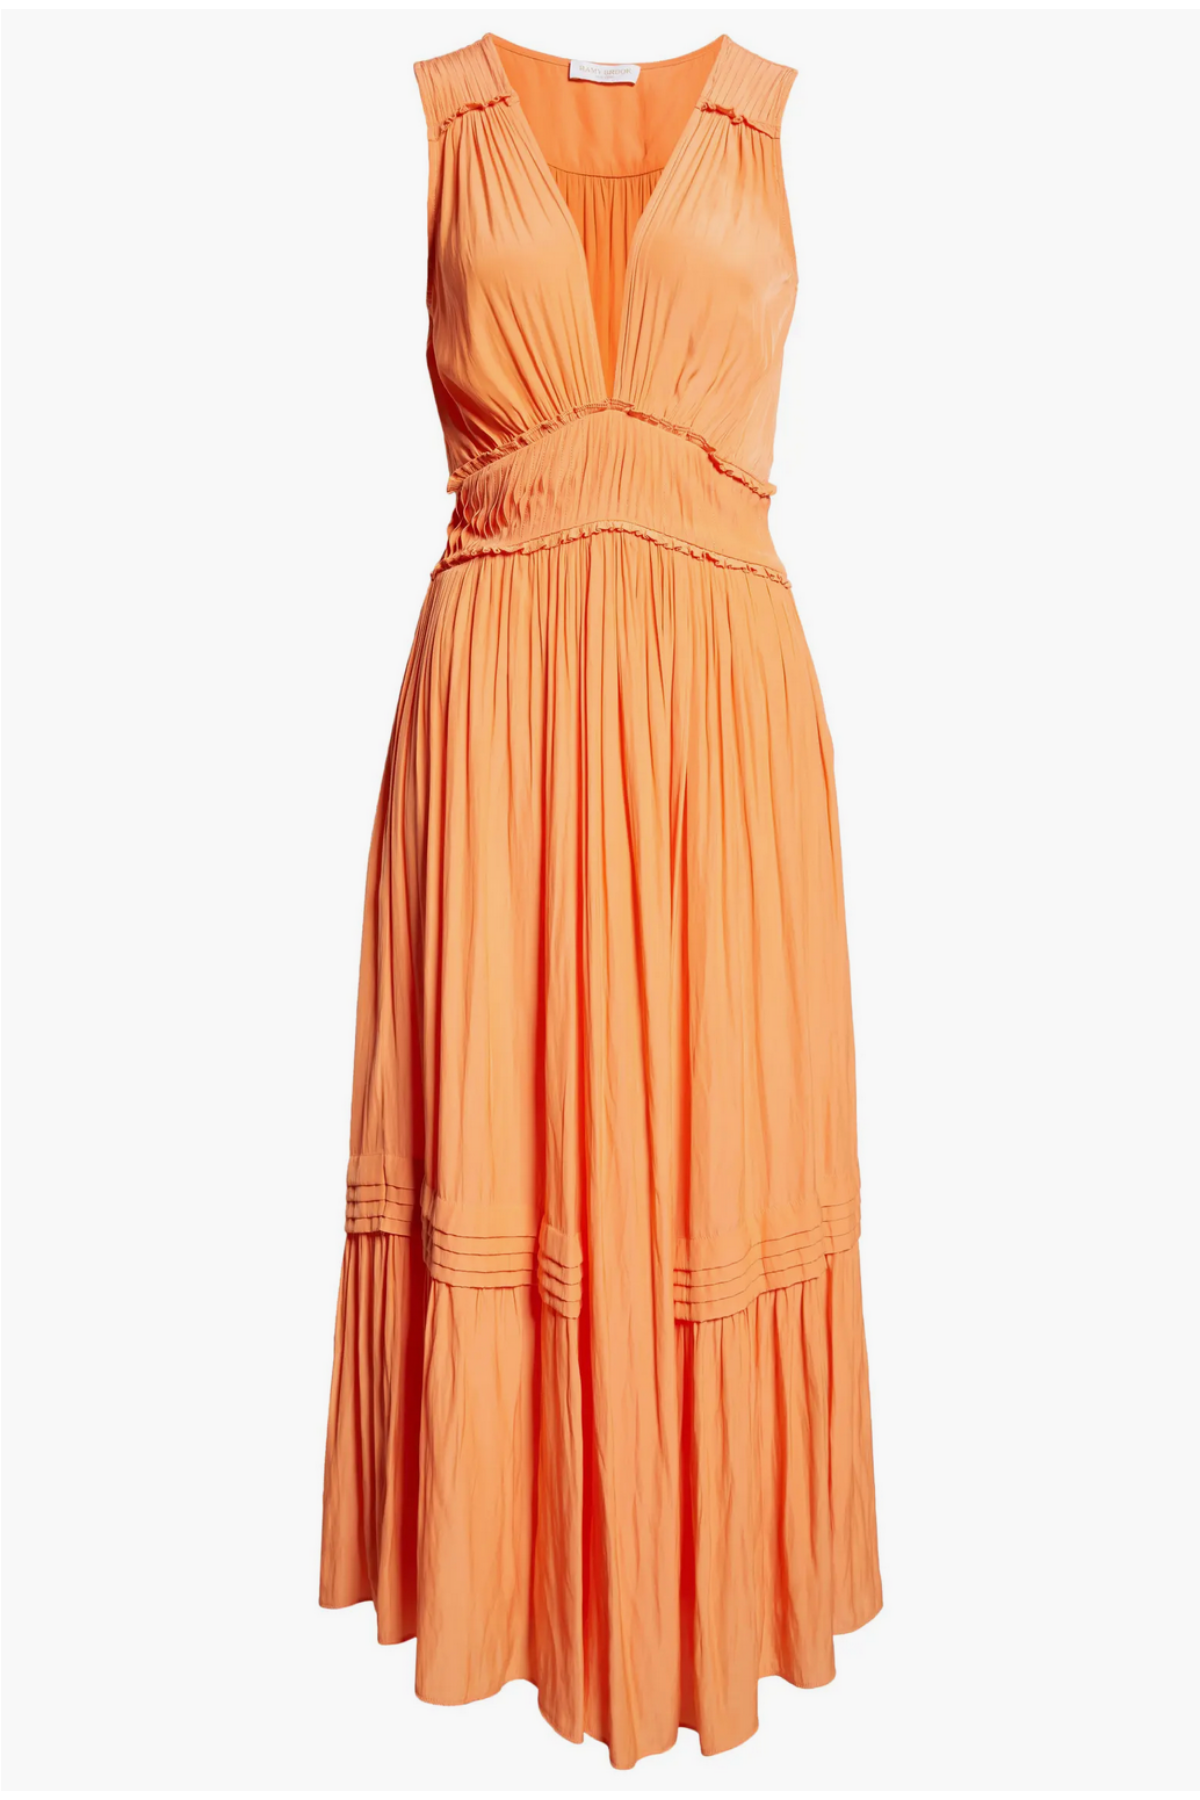 Ramy Brook Dierdre Tropic Orange Maxi Dress